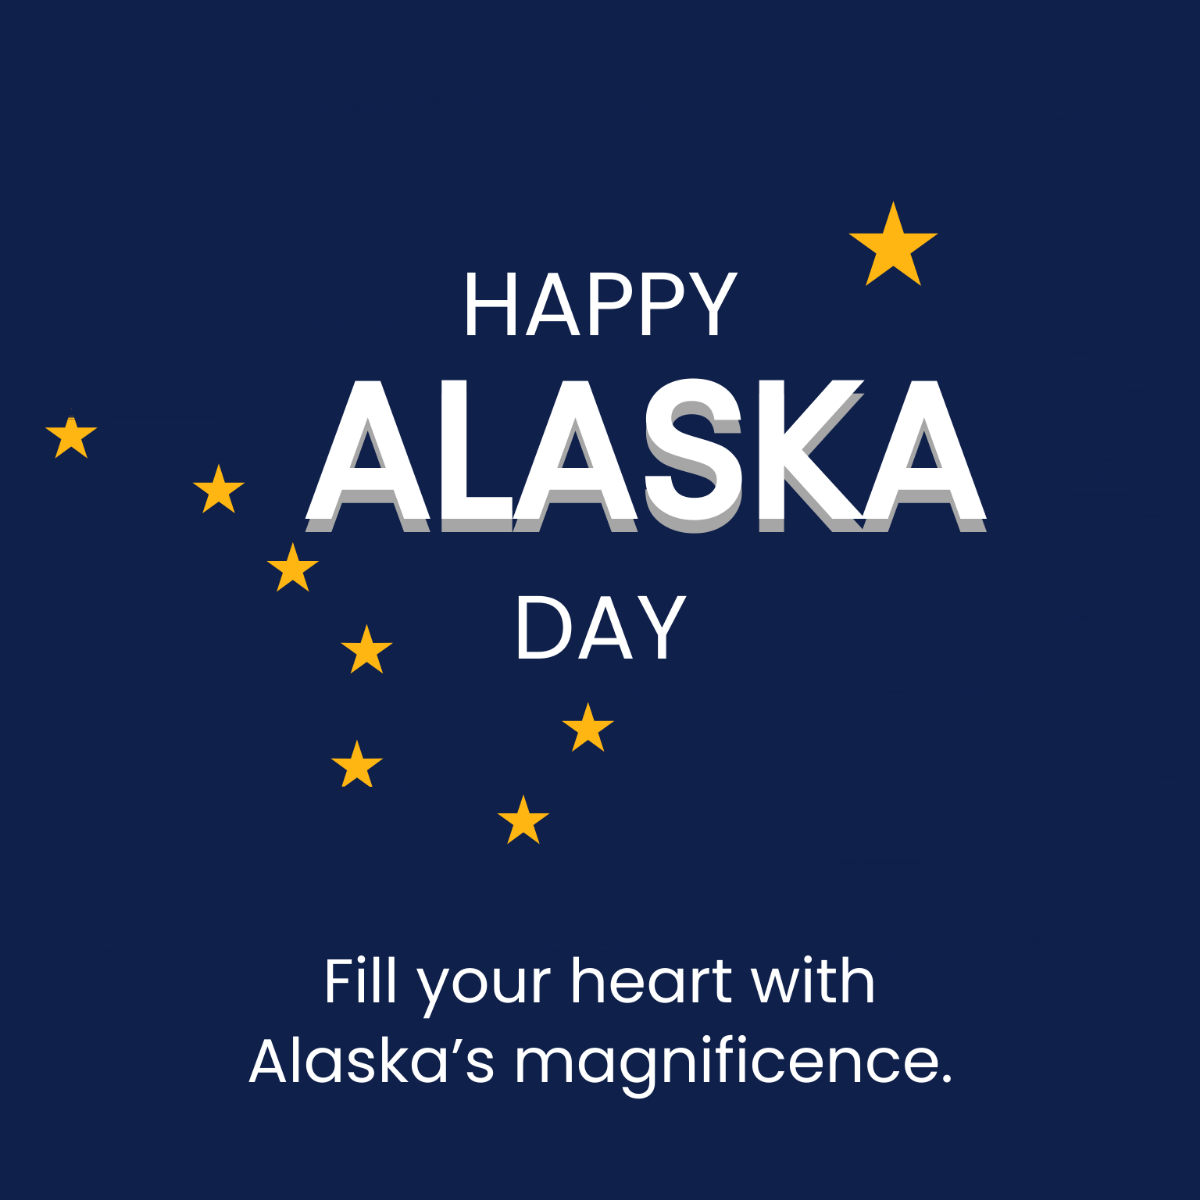 Alaska Day Greeting Card Vector Template